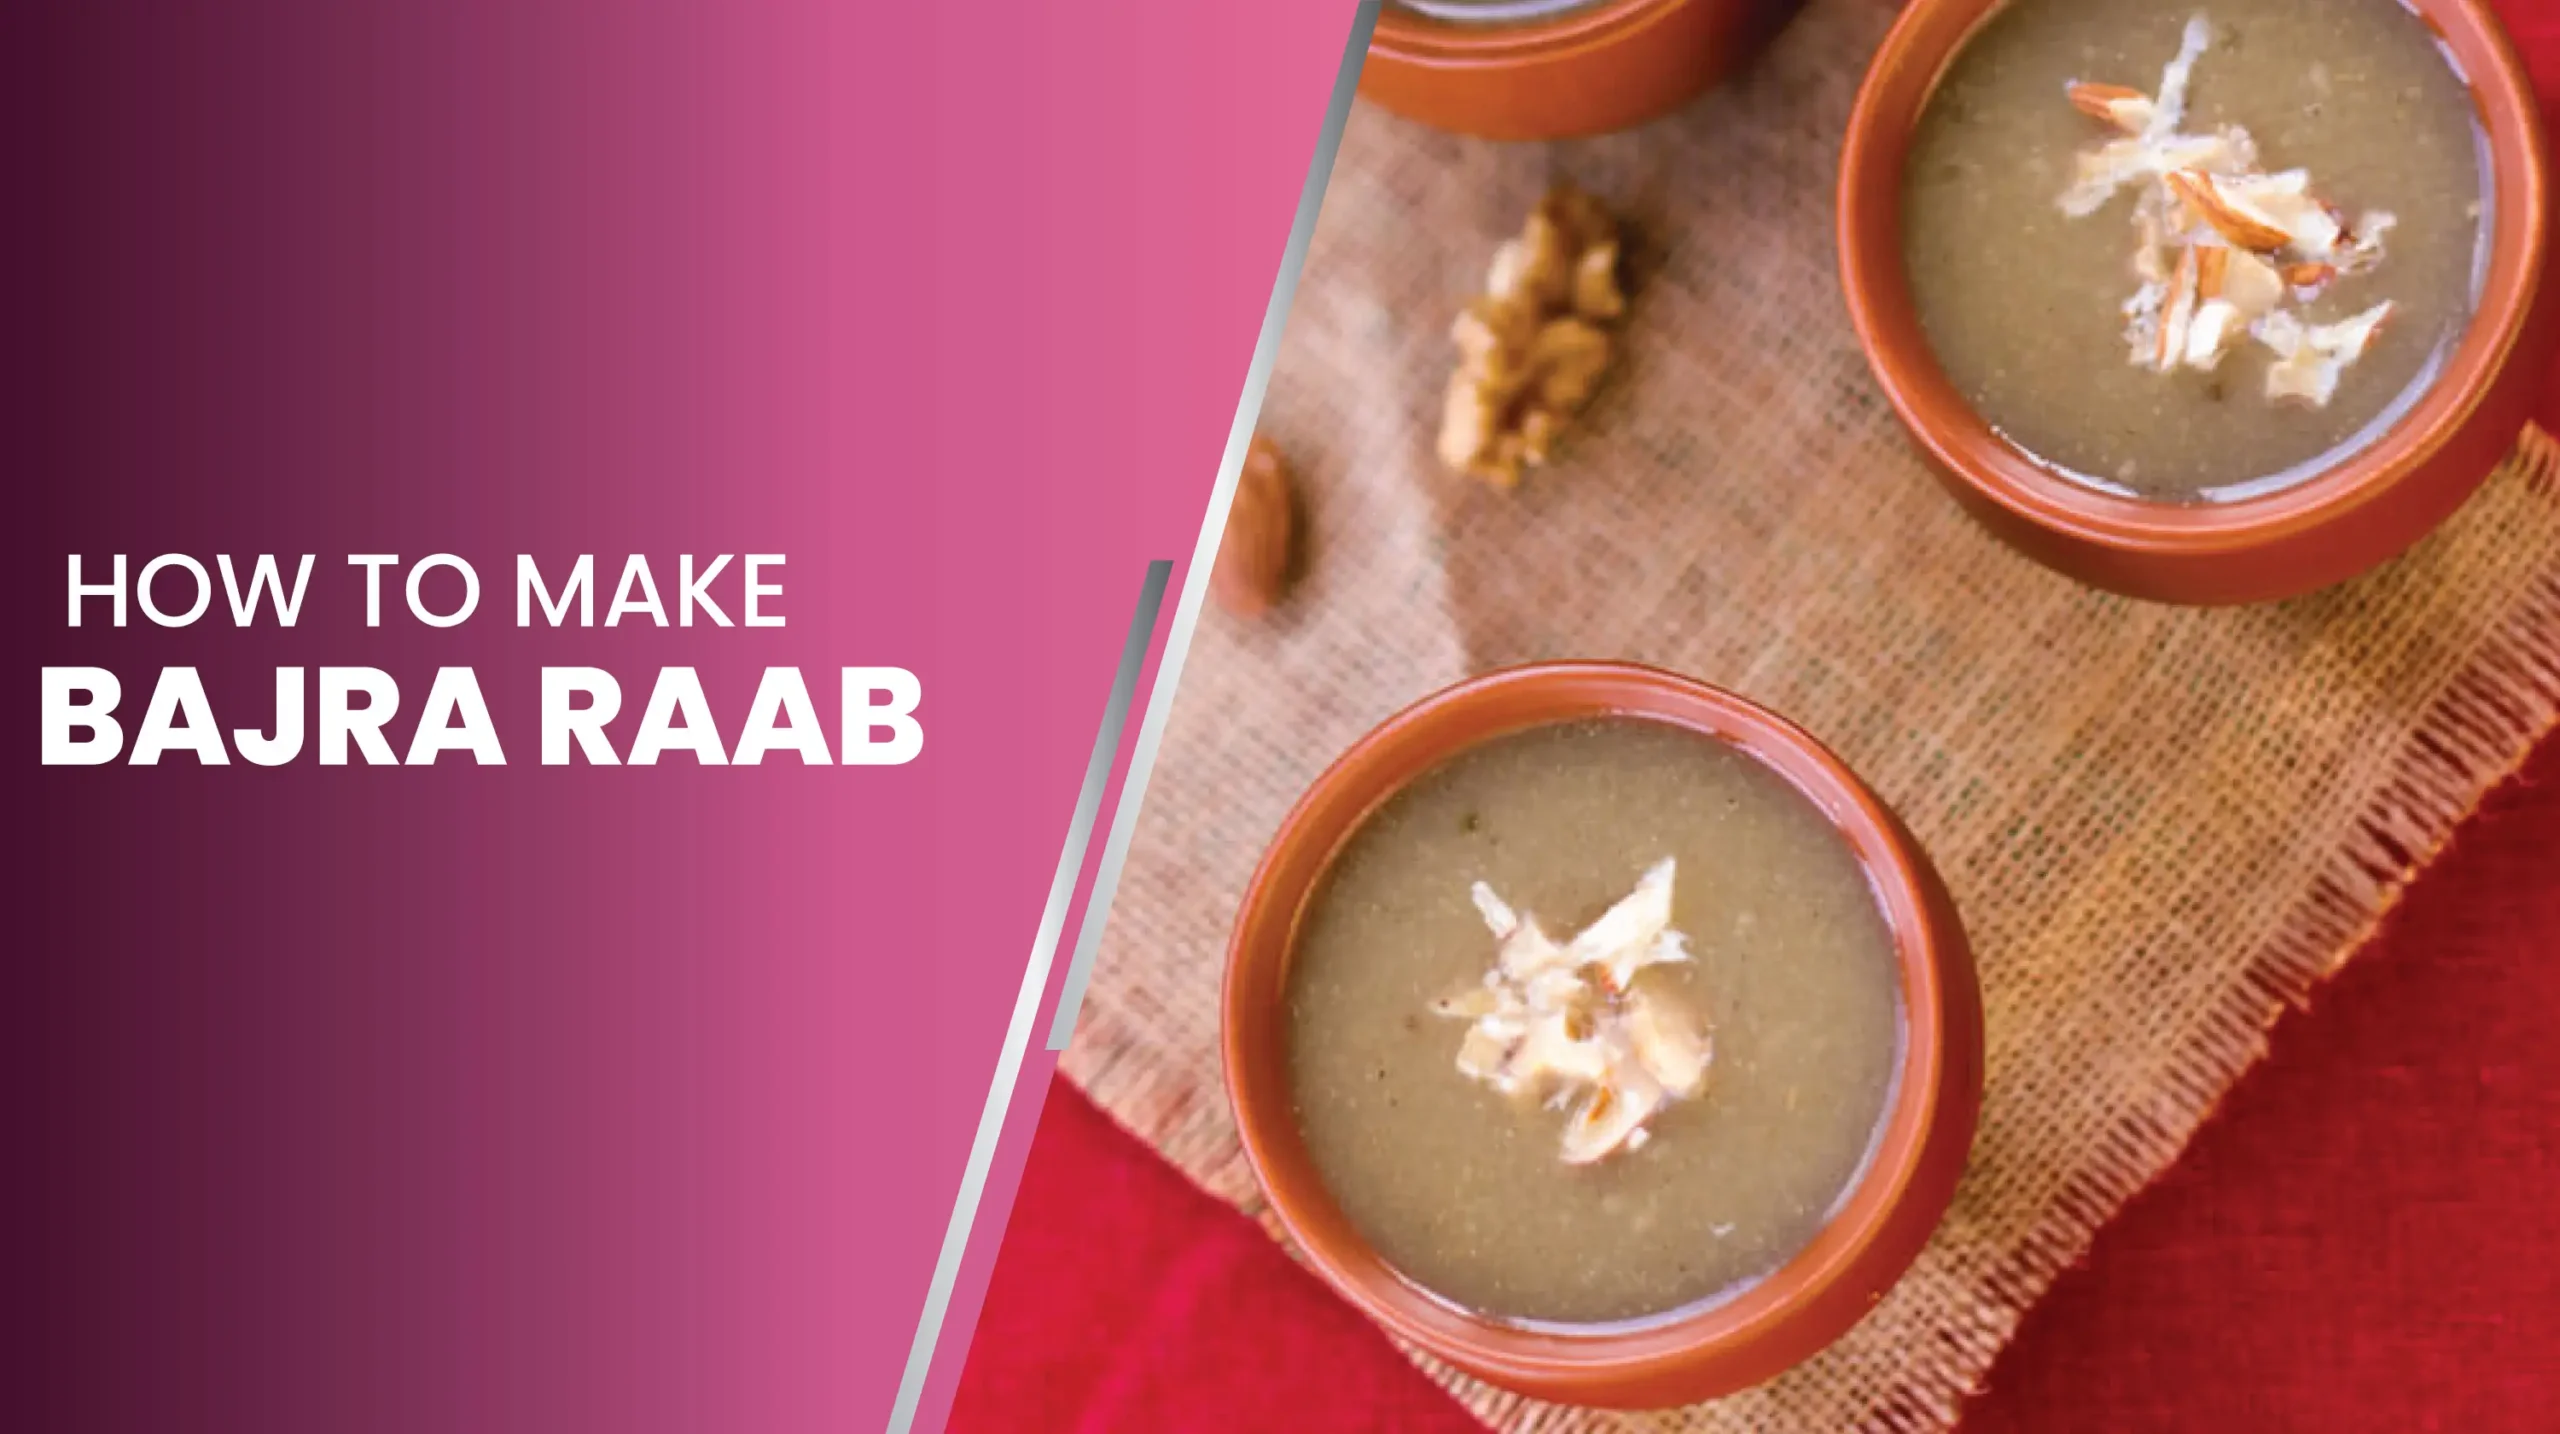 11how to make bajra raab or pearl millet drink recipe